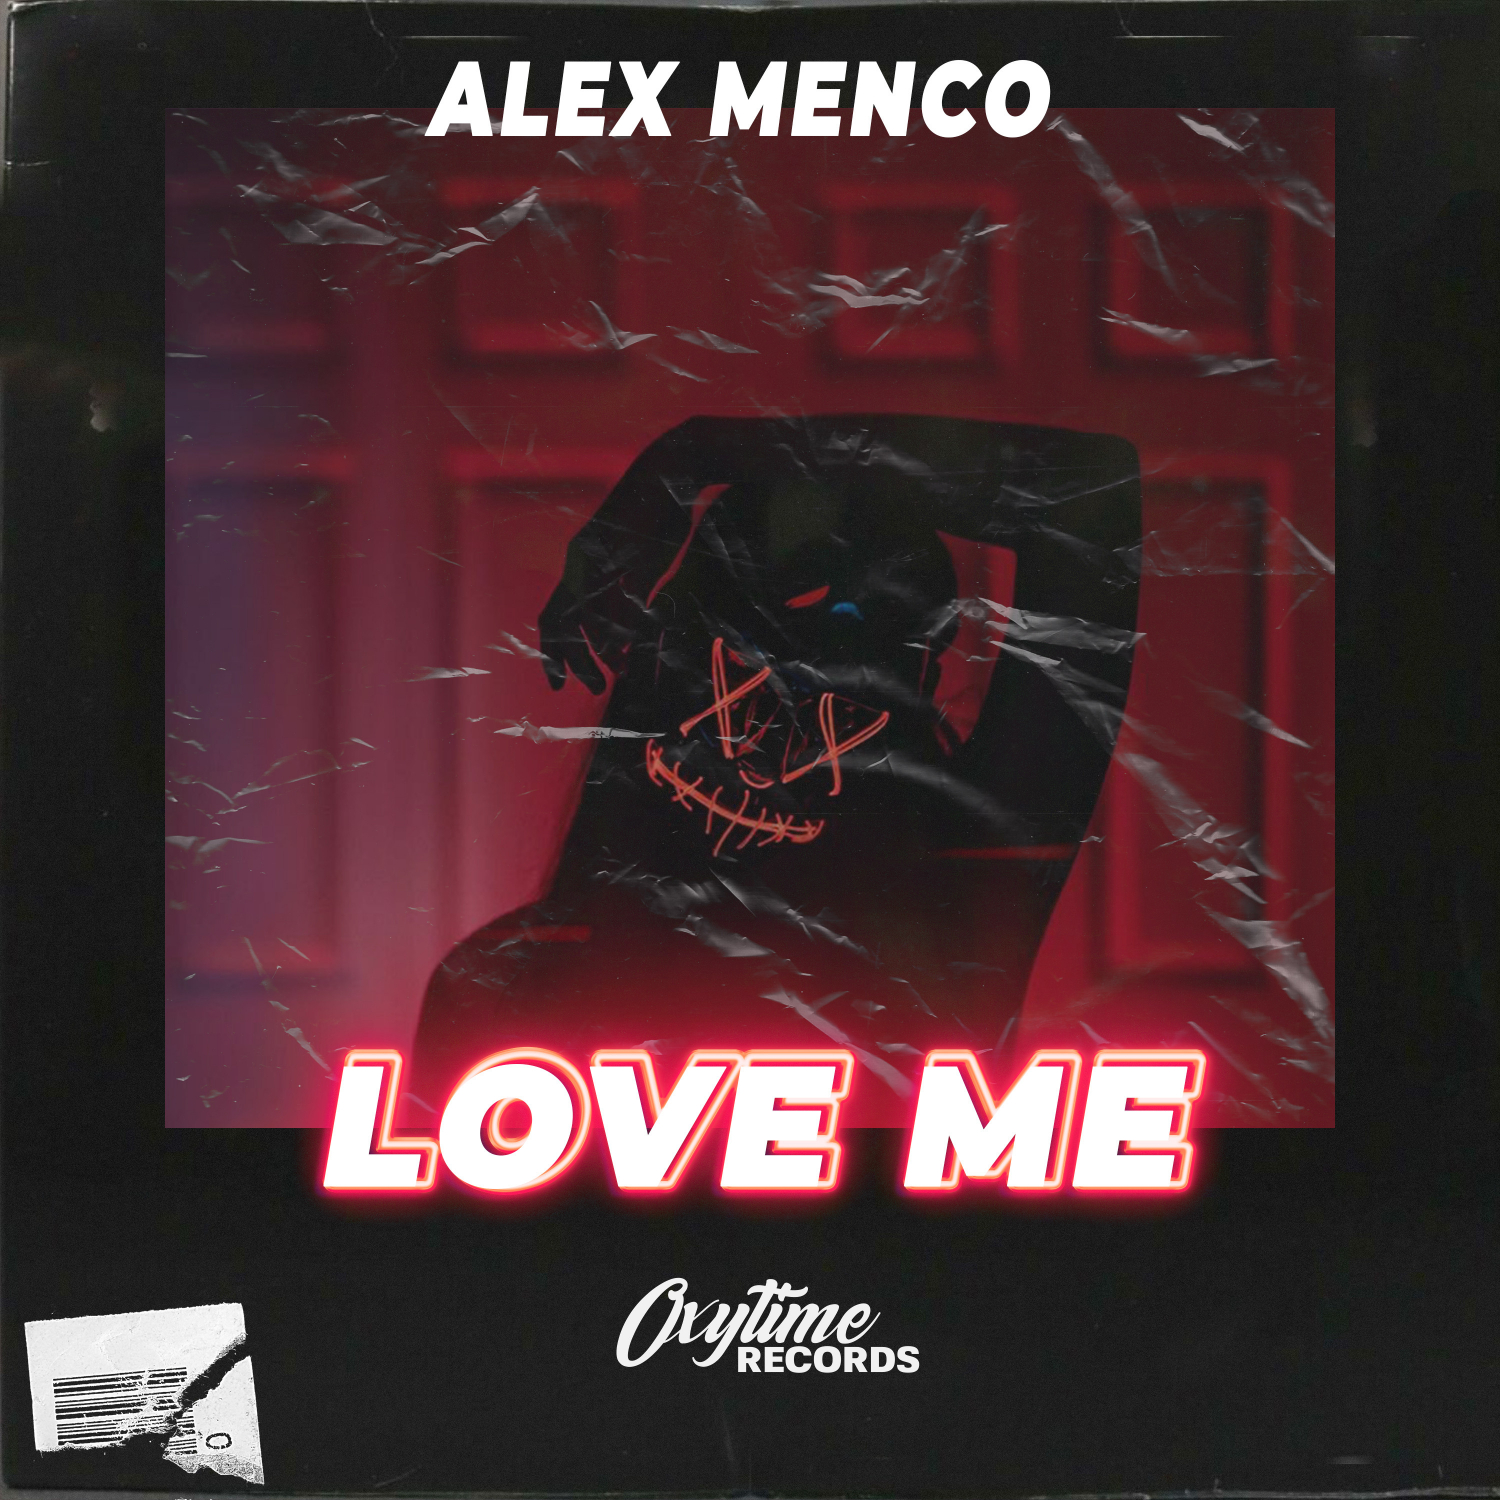 Алекс лове. Alex Menco - Nitro. Alex Menco - Tonight. Aleks Love. Alex Menco album.